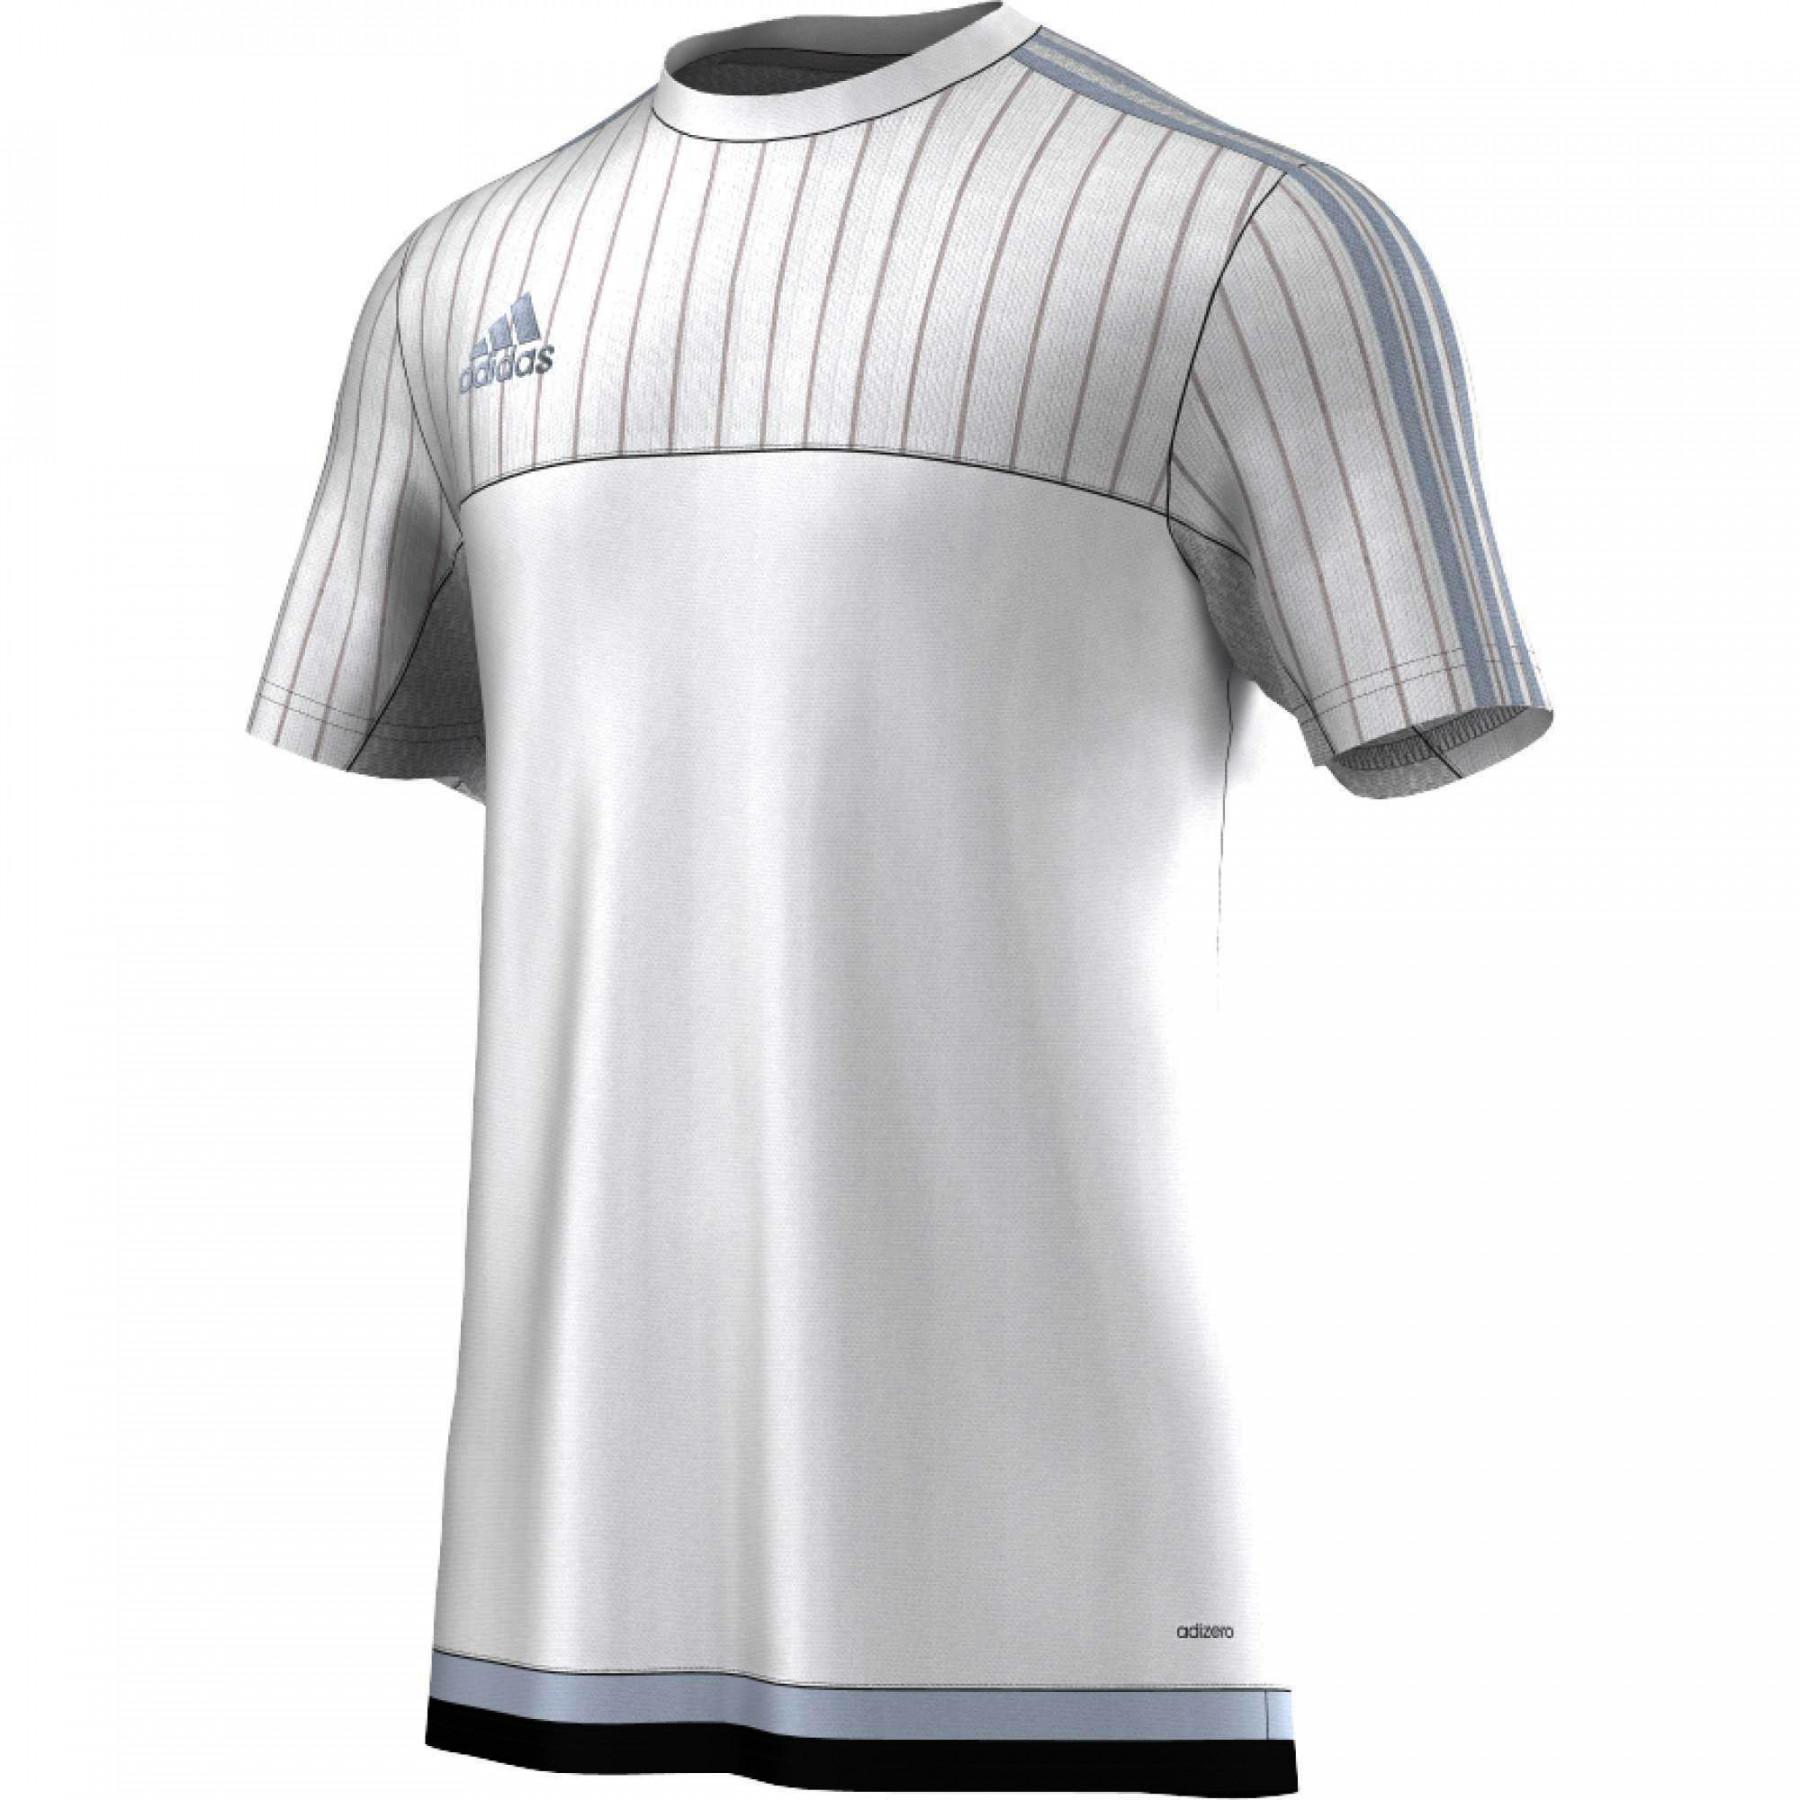 Treningowa koszulka bramkarska adidas Tiro15